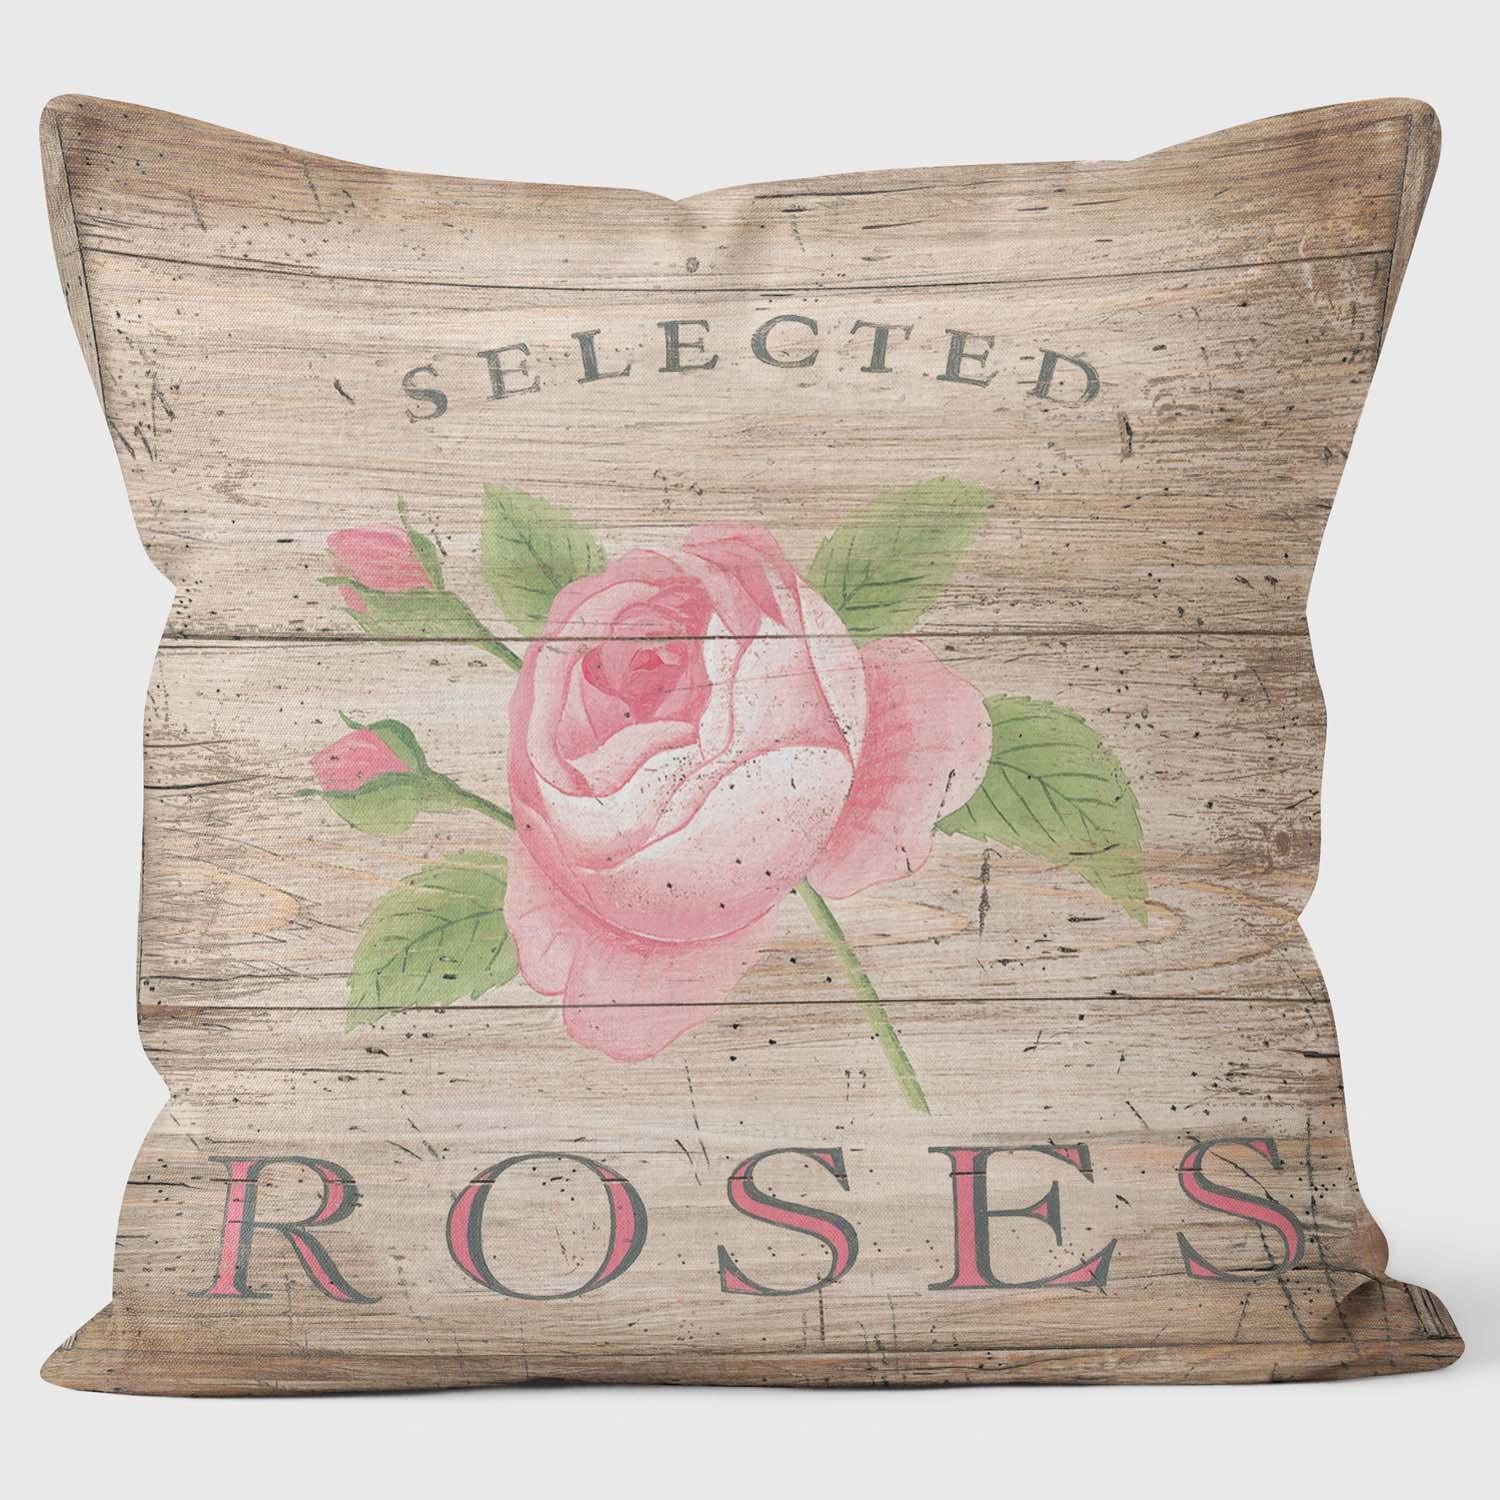 Selected Roses - Martin Wiscombe Cushion - Handmade Cushions UK - WeLoveCushions